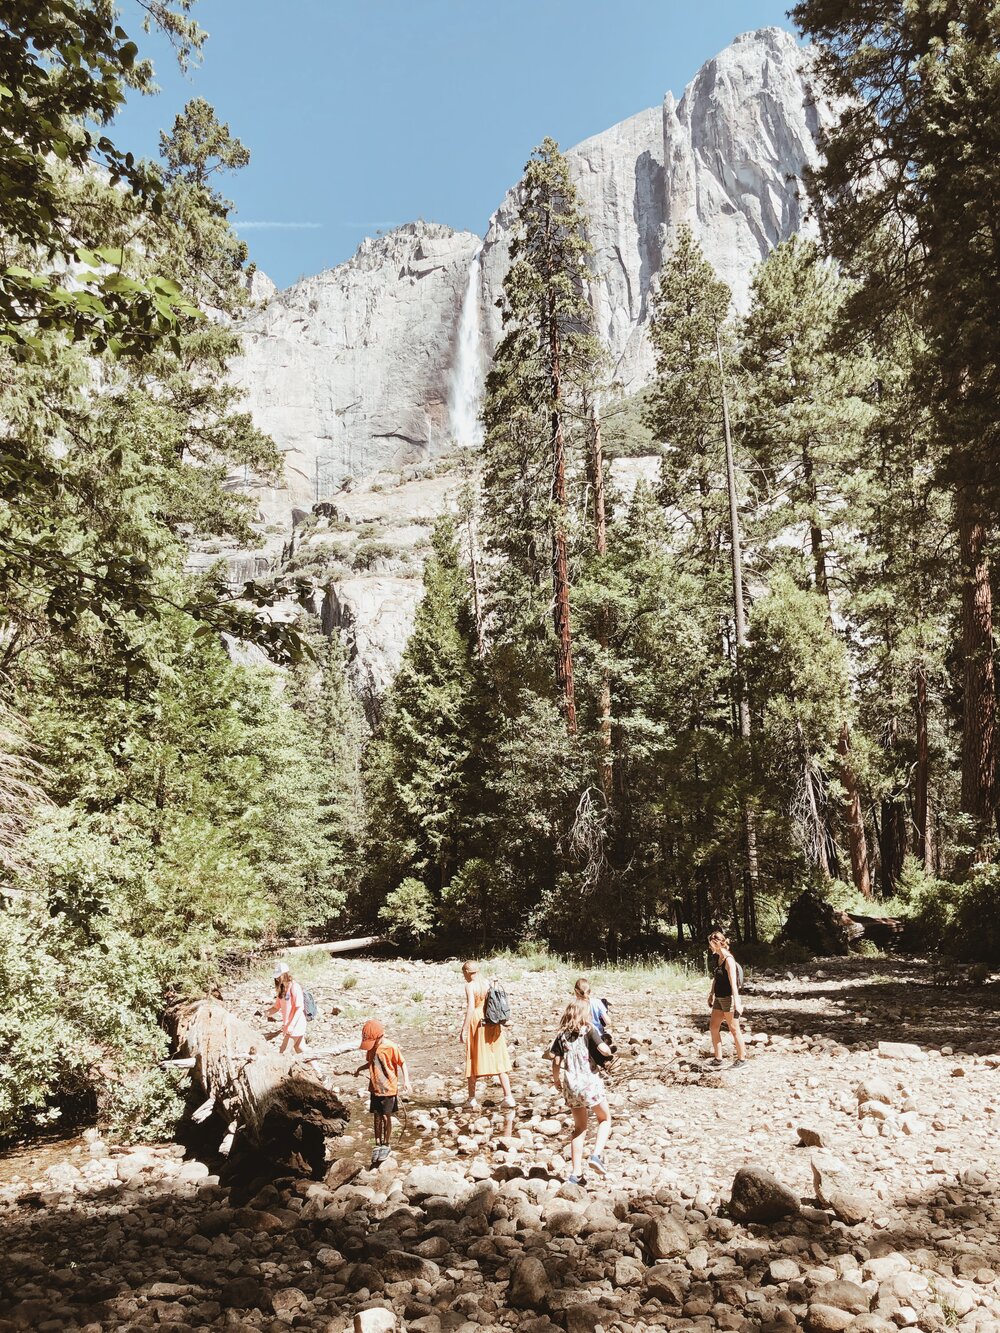 Lower Yosemite Falls, Yosemite